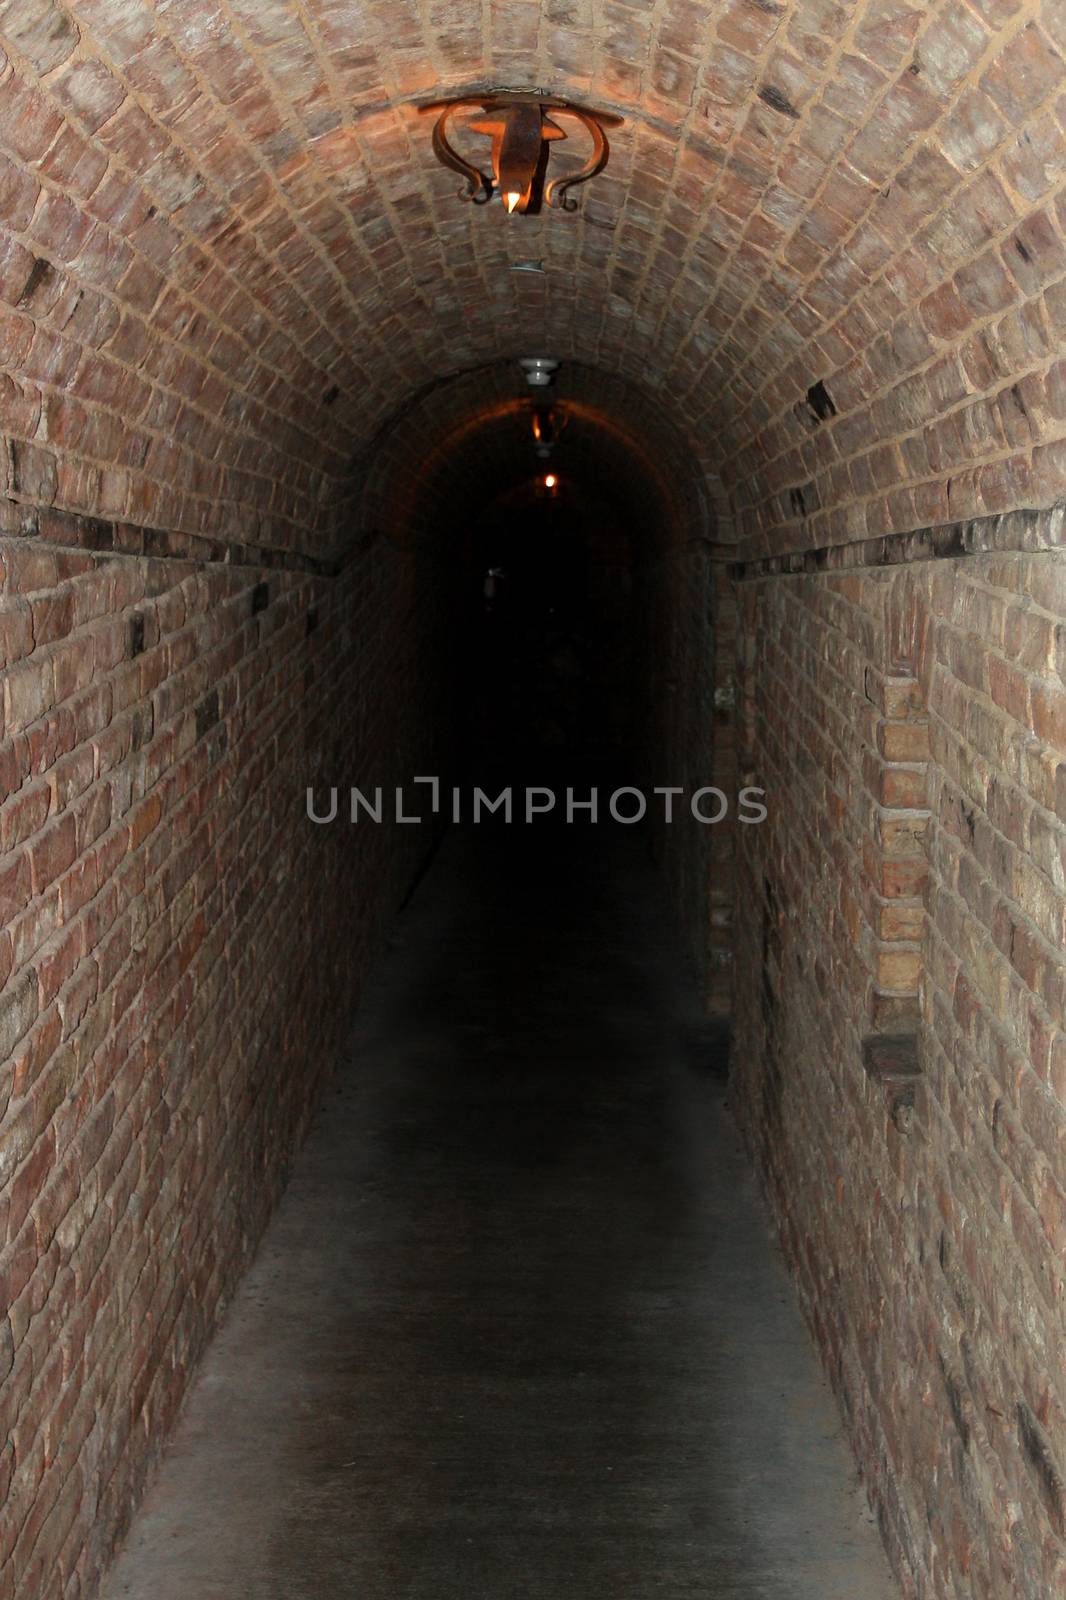 Corridor leading into darkness